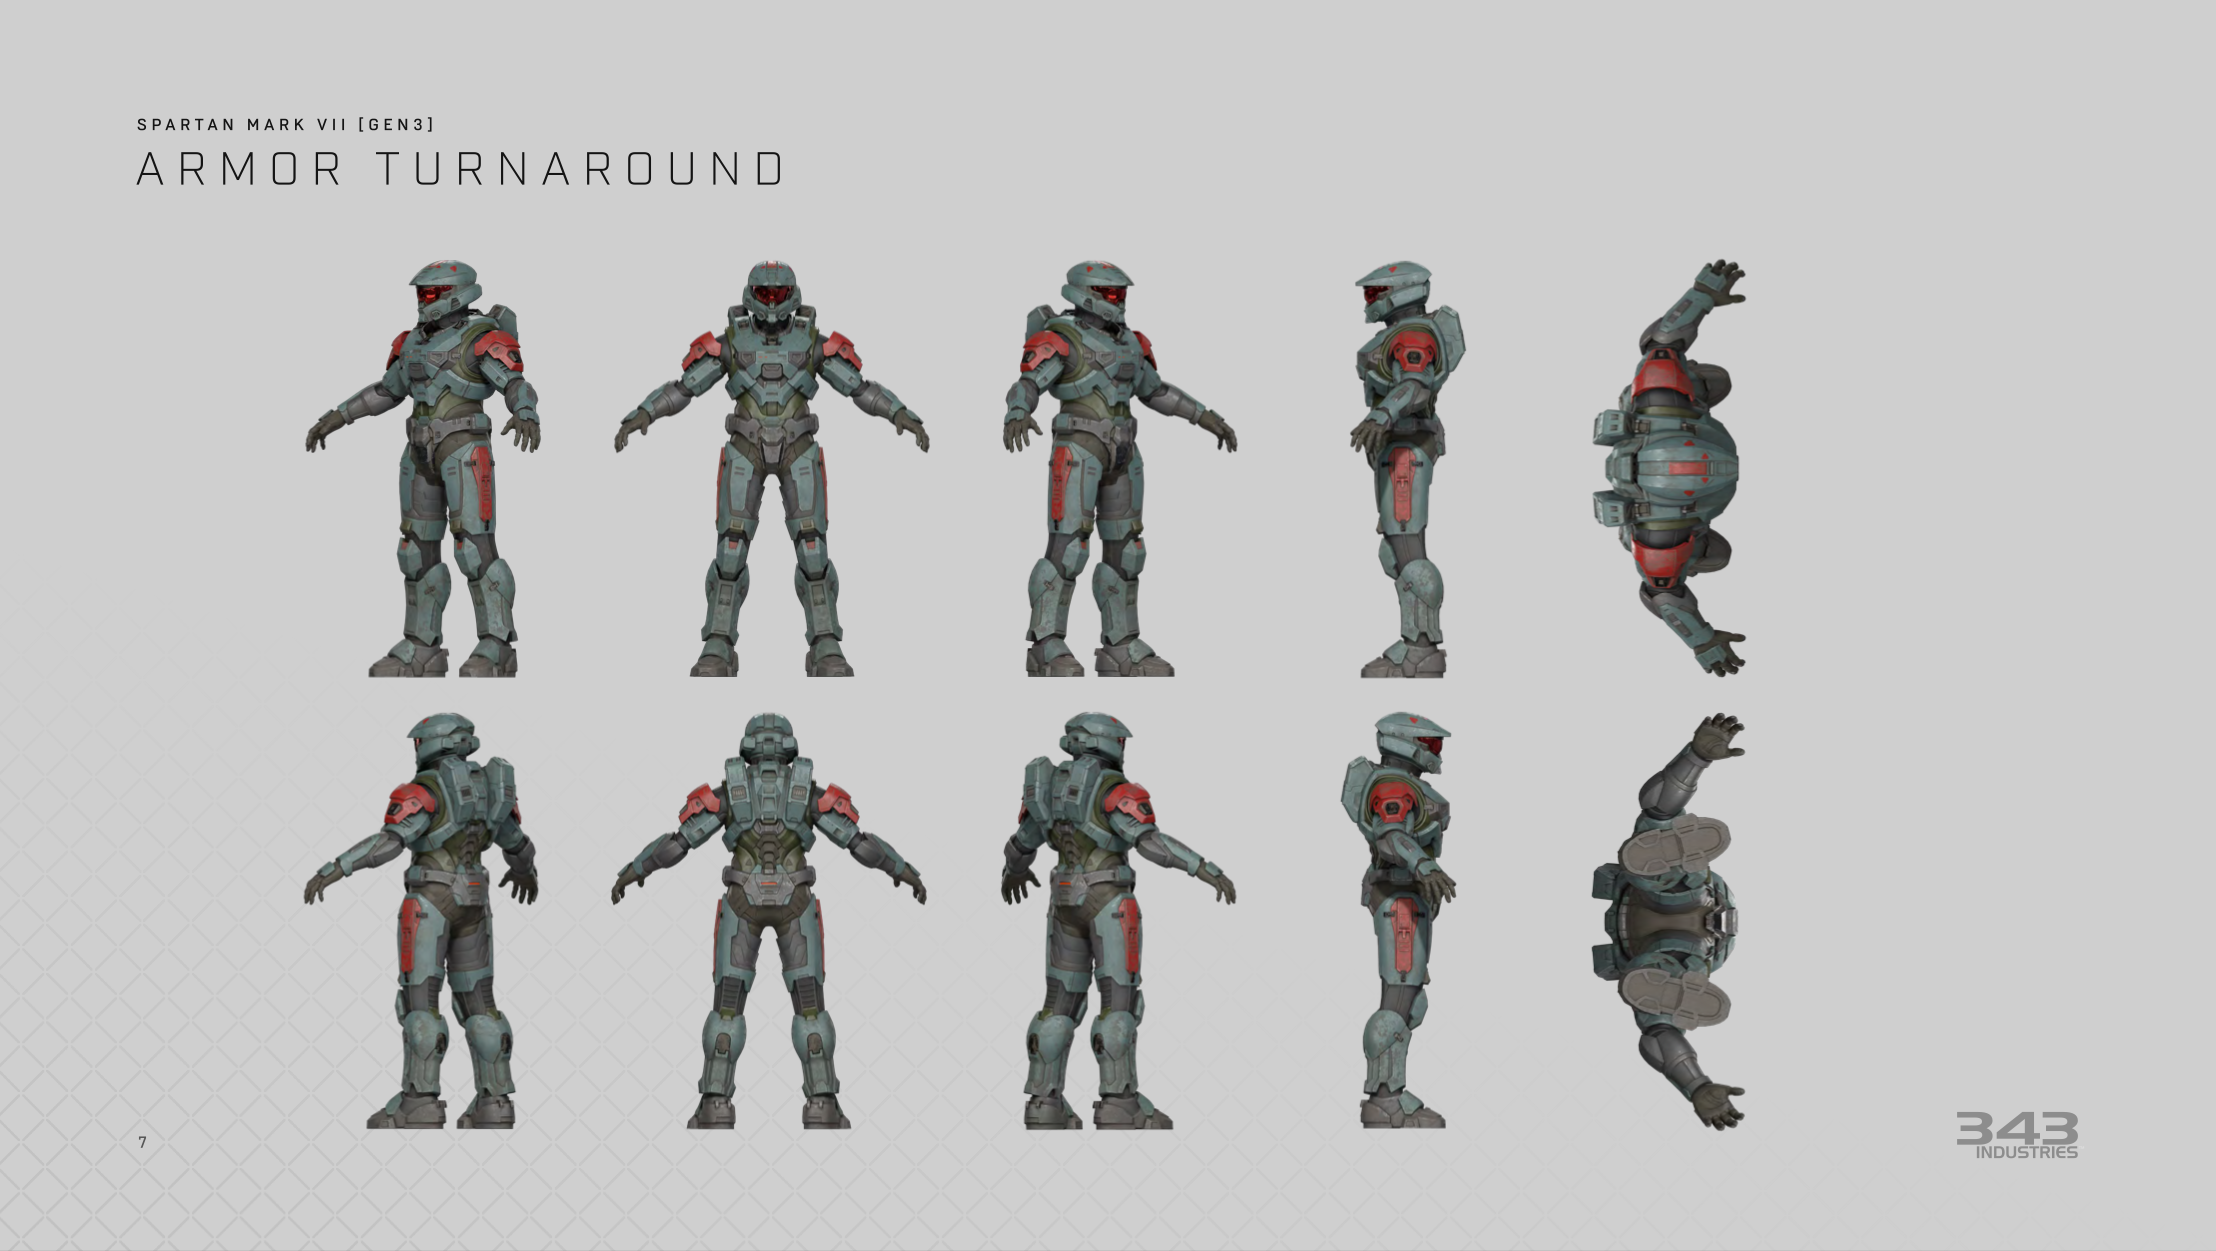 Armor turnaround for the Spartan Mk. VII Gen 3 cosplay